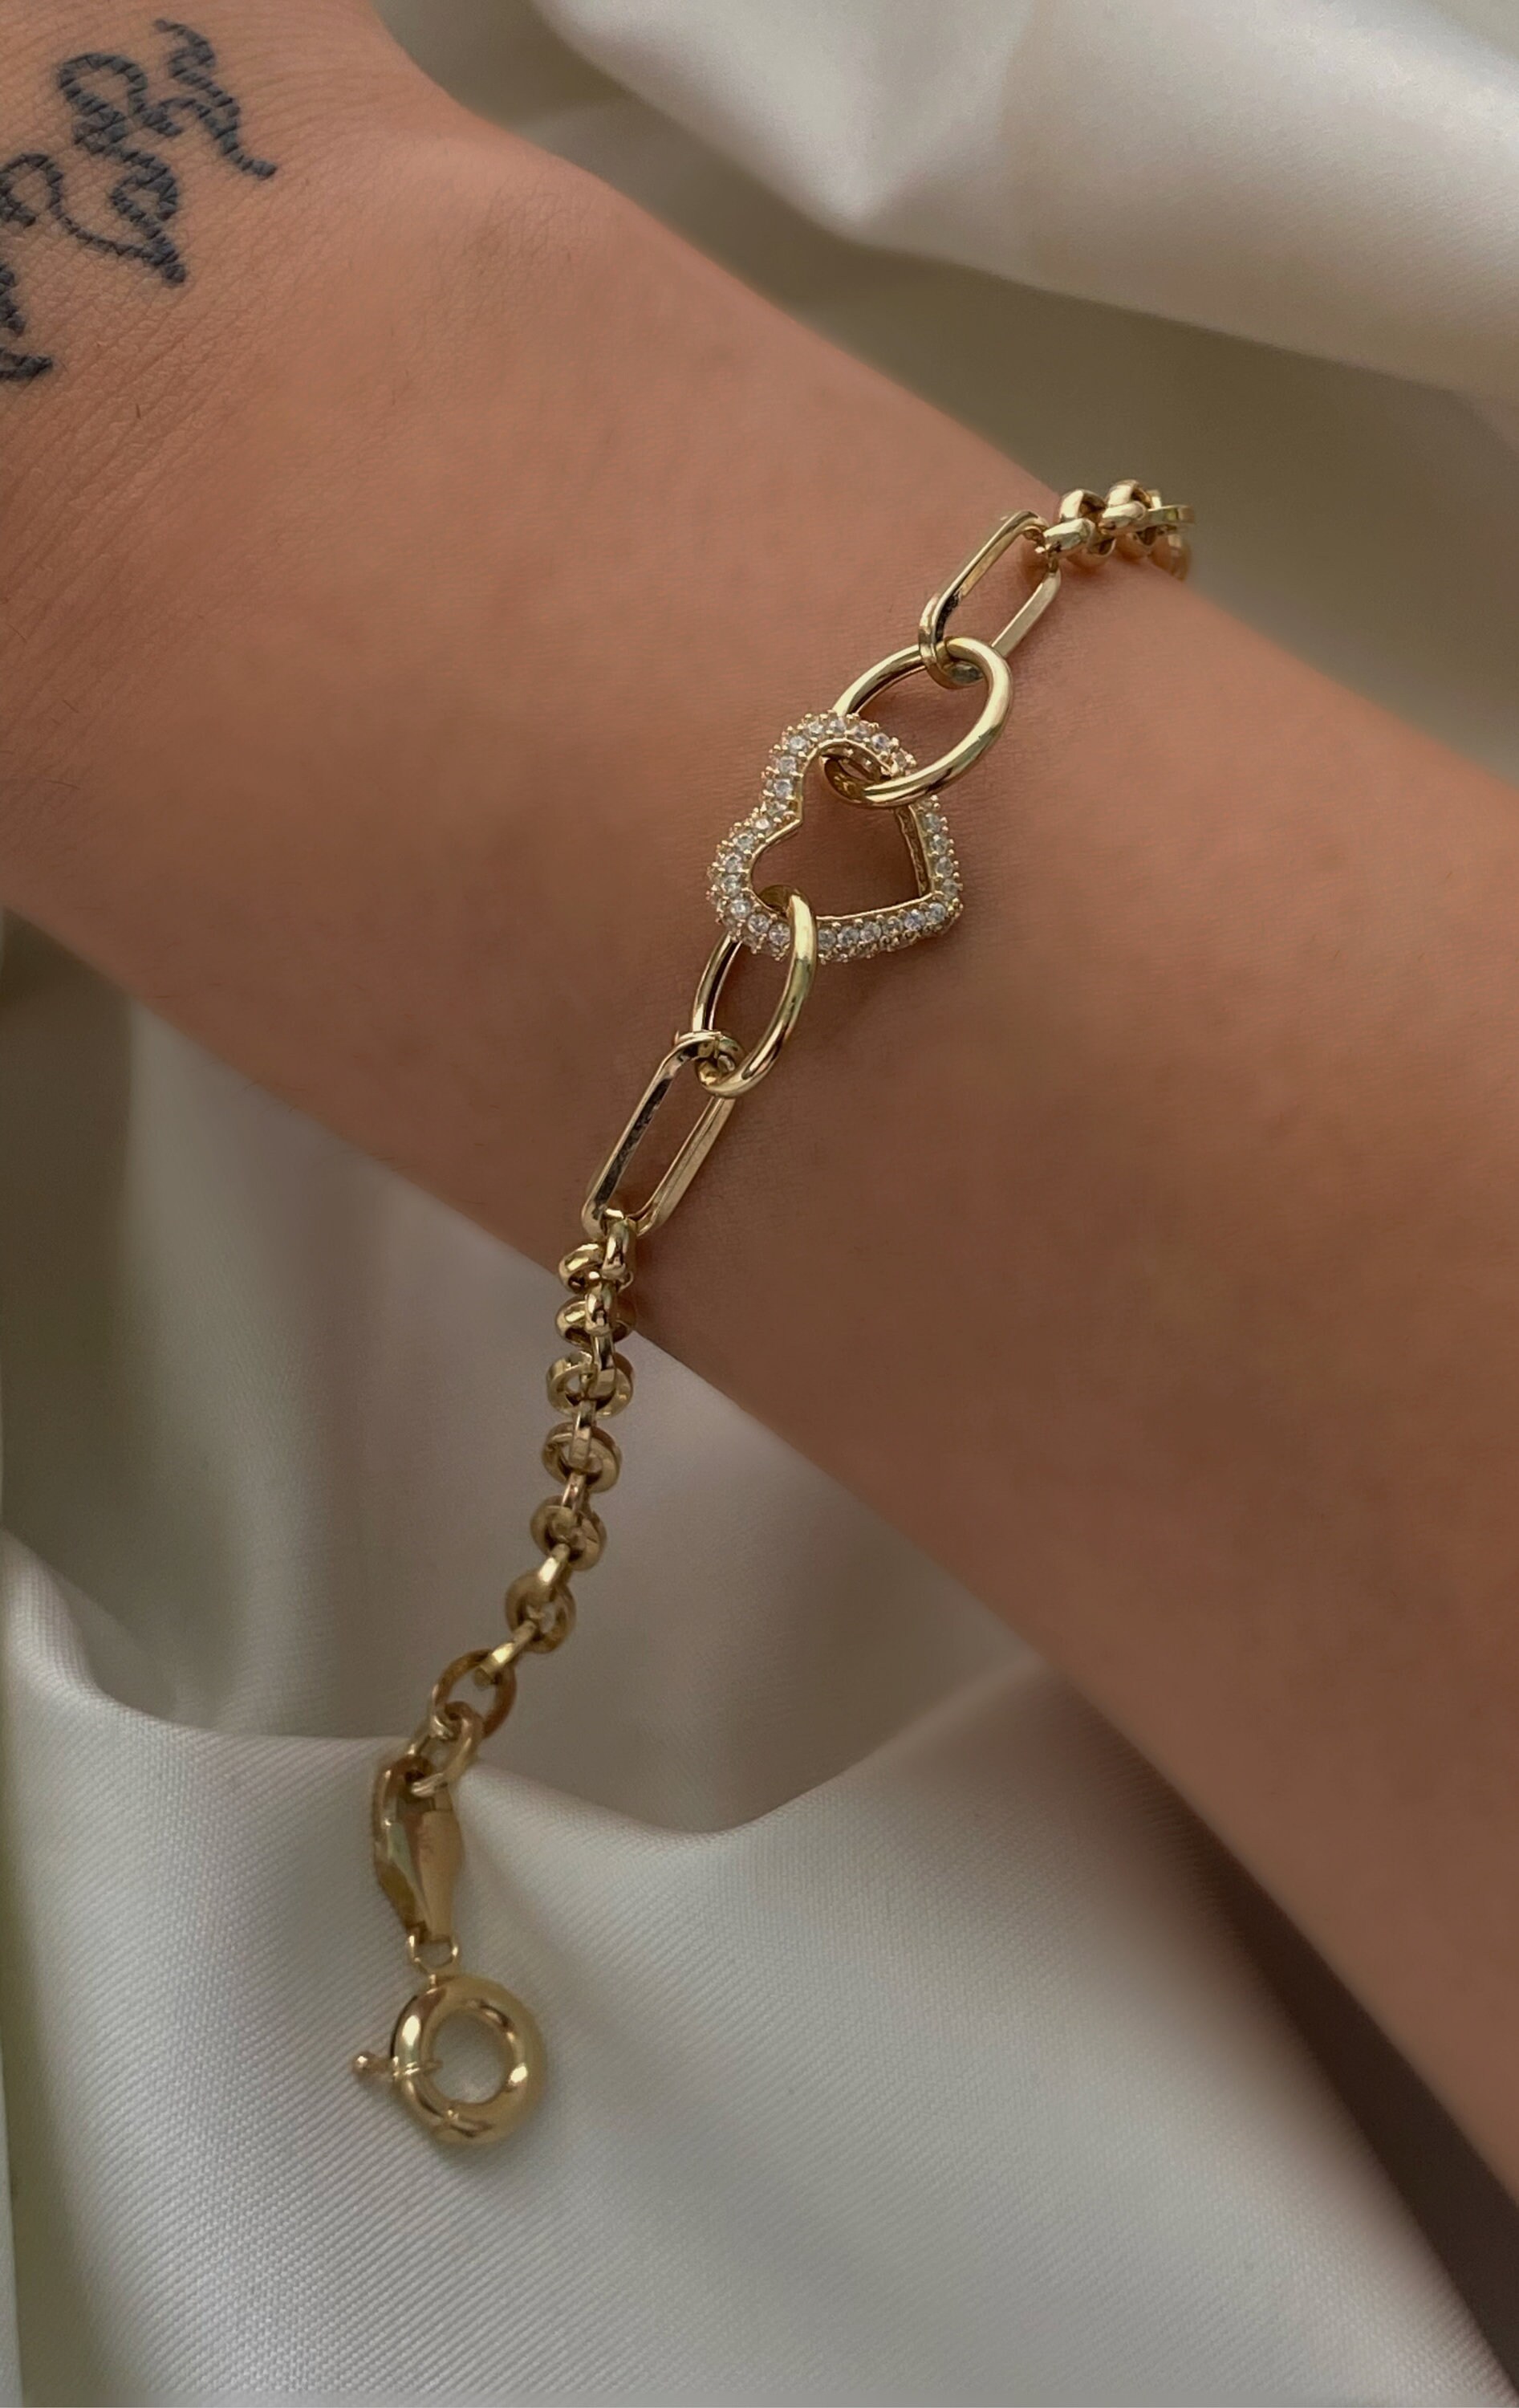 Rolo Charm Bracelet Gold Filled / with Link Lock / 8